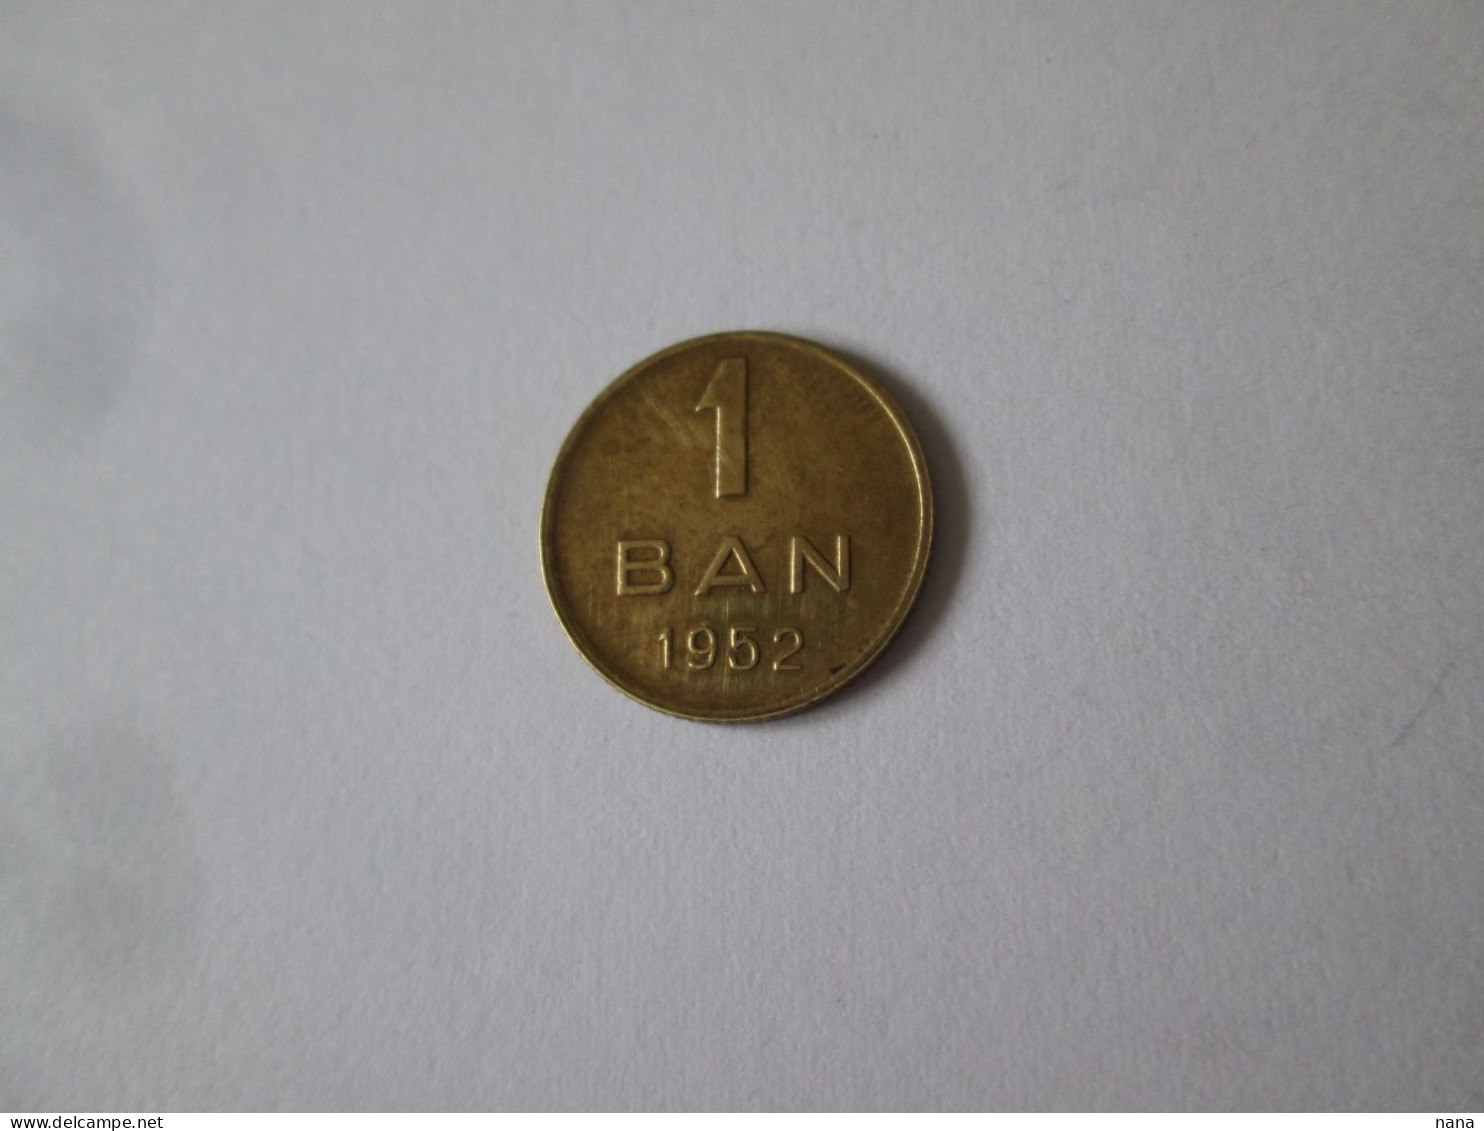 Roumanie 1 Ban 1952 Cuivre Tres Belle Piece/Romania 1 Ban 1952 Cooper Very Nice Coin - Roumanie